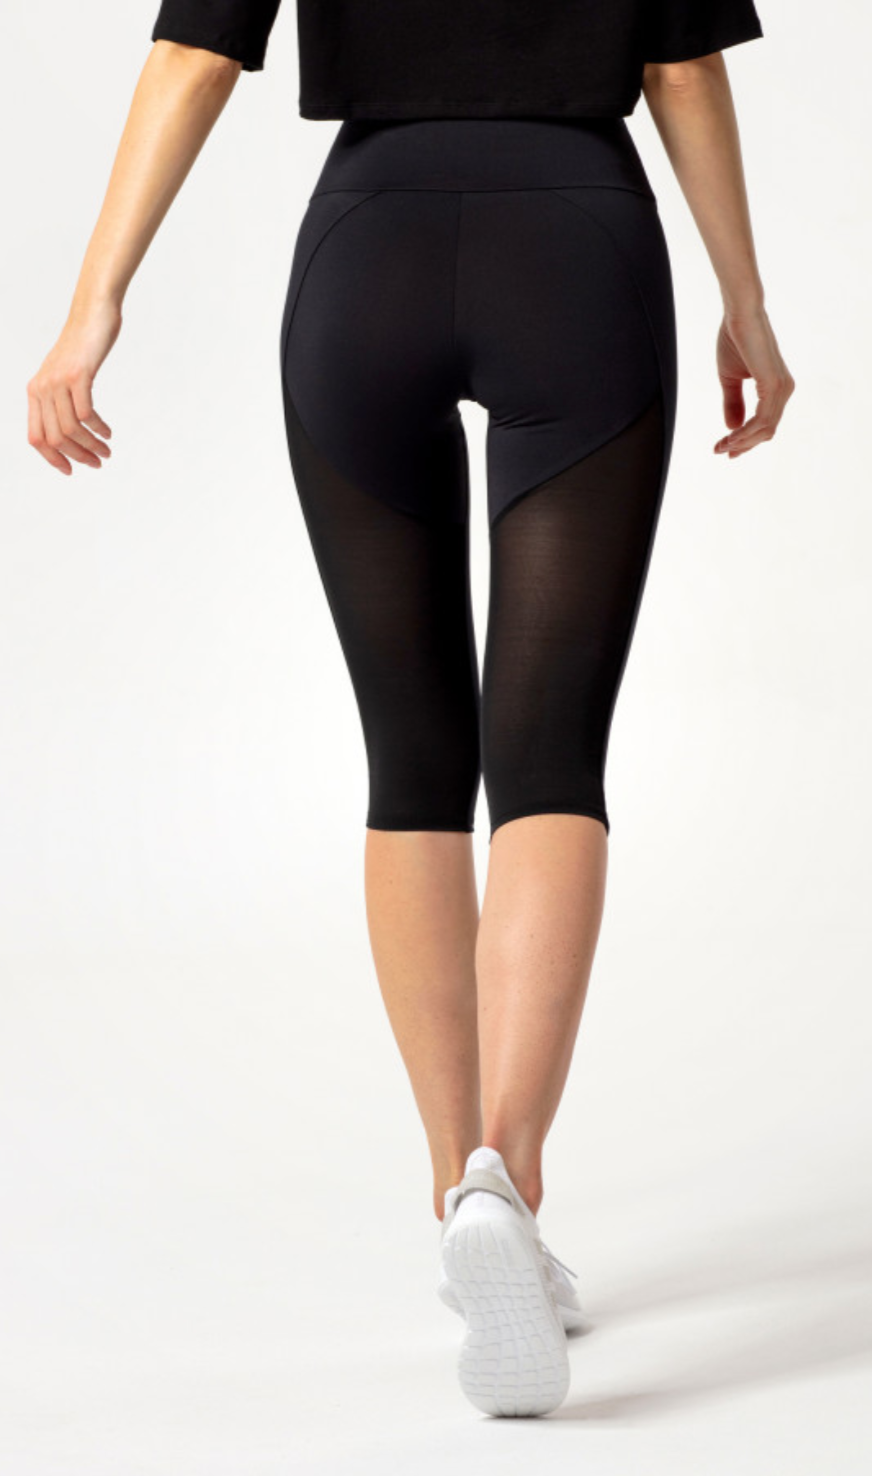 Carpatree Hyperion Tulle Capri Leggings - Black high waisted 3/4 length leggings with mesh panels at the back of the legs.